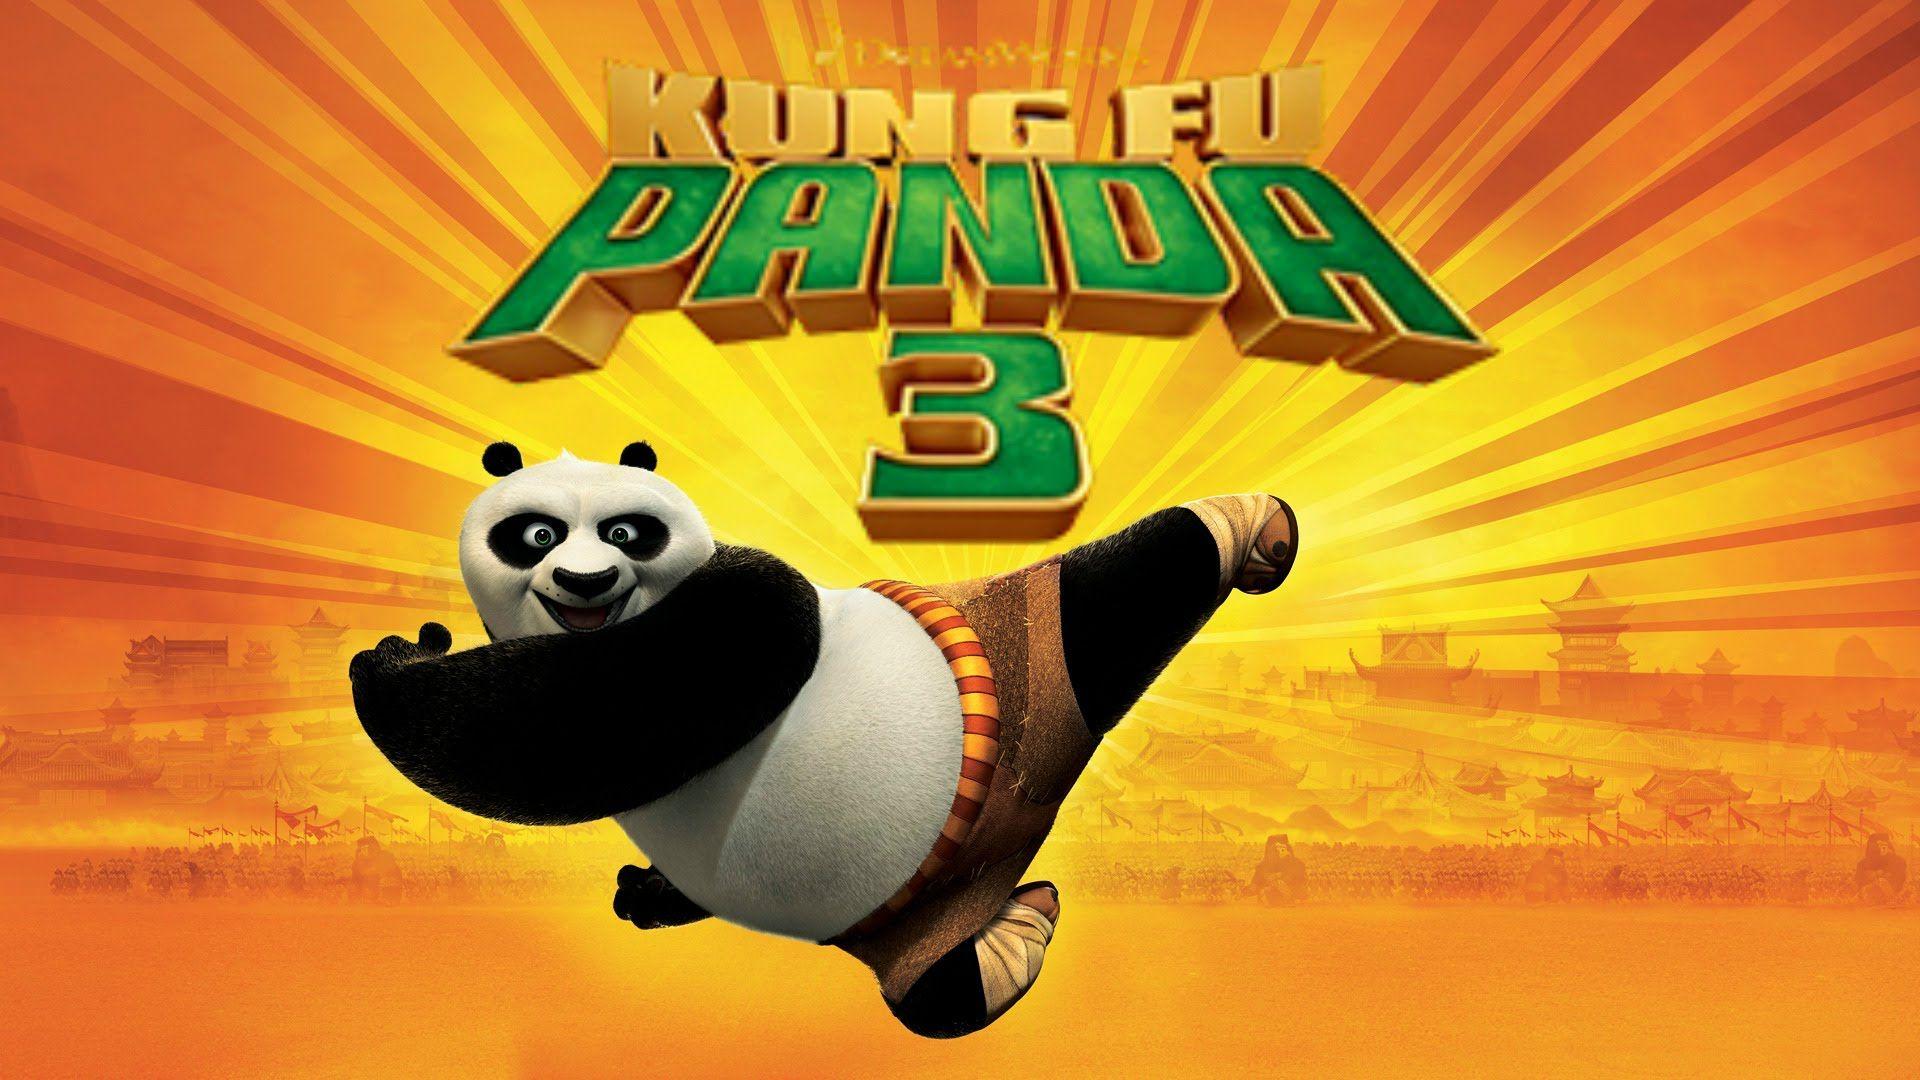 Kung Fu Panda 3 HD wallpaper free download